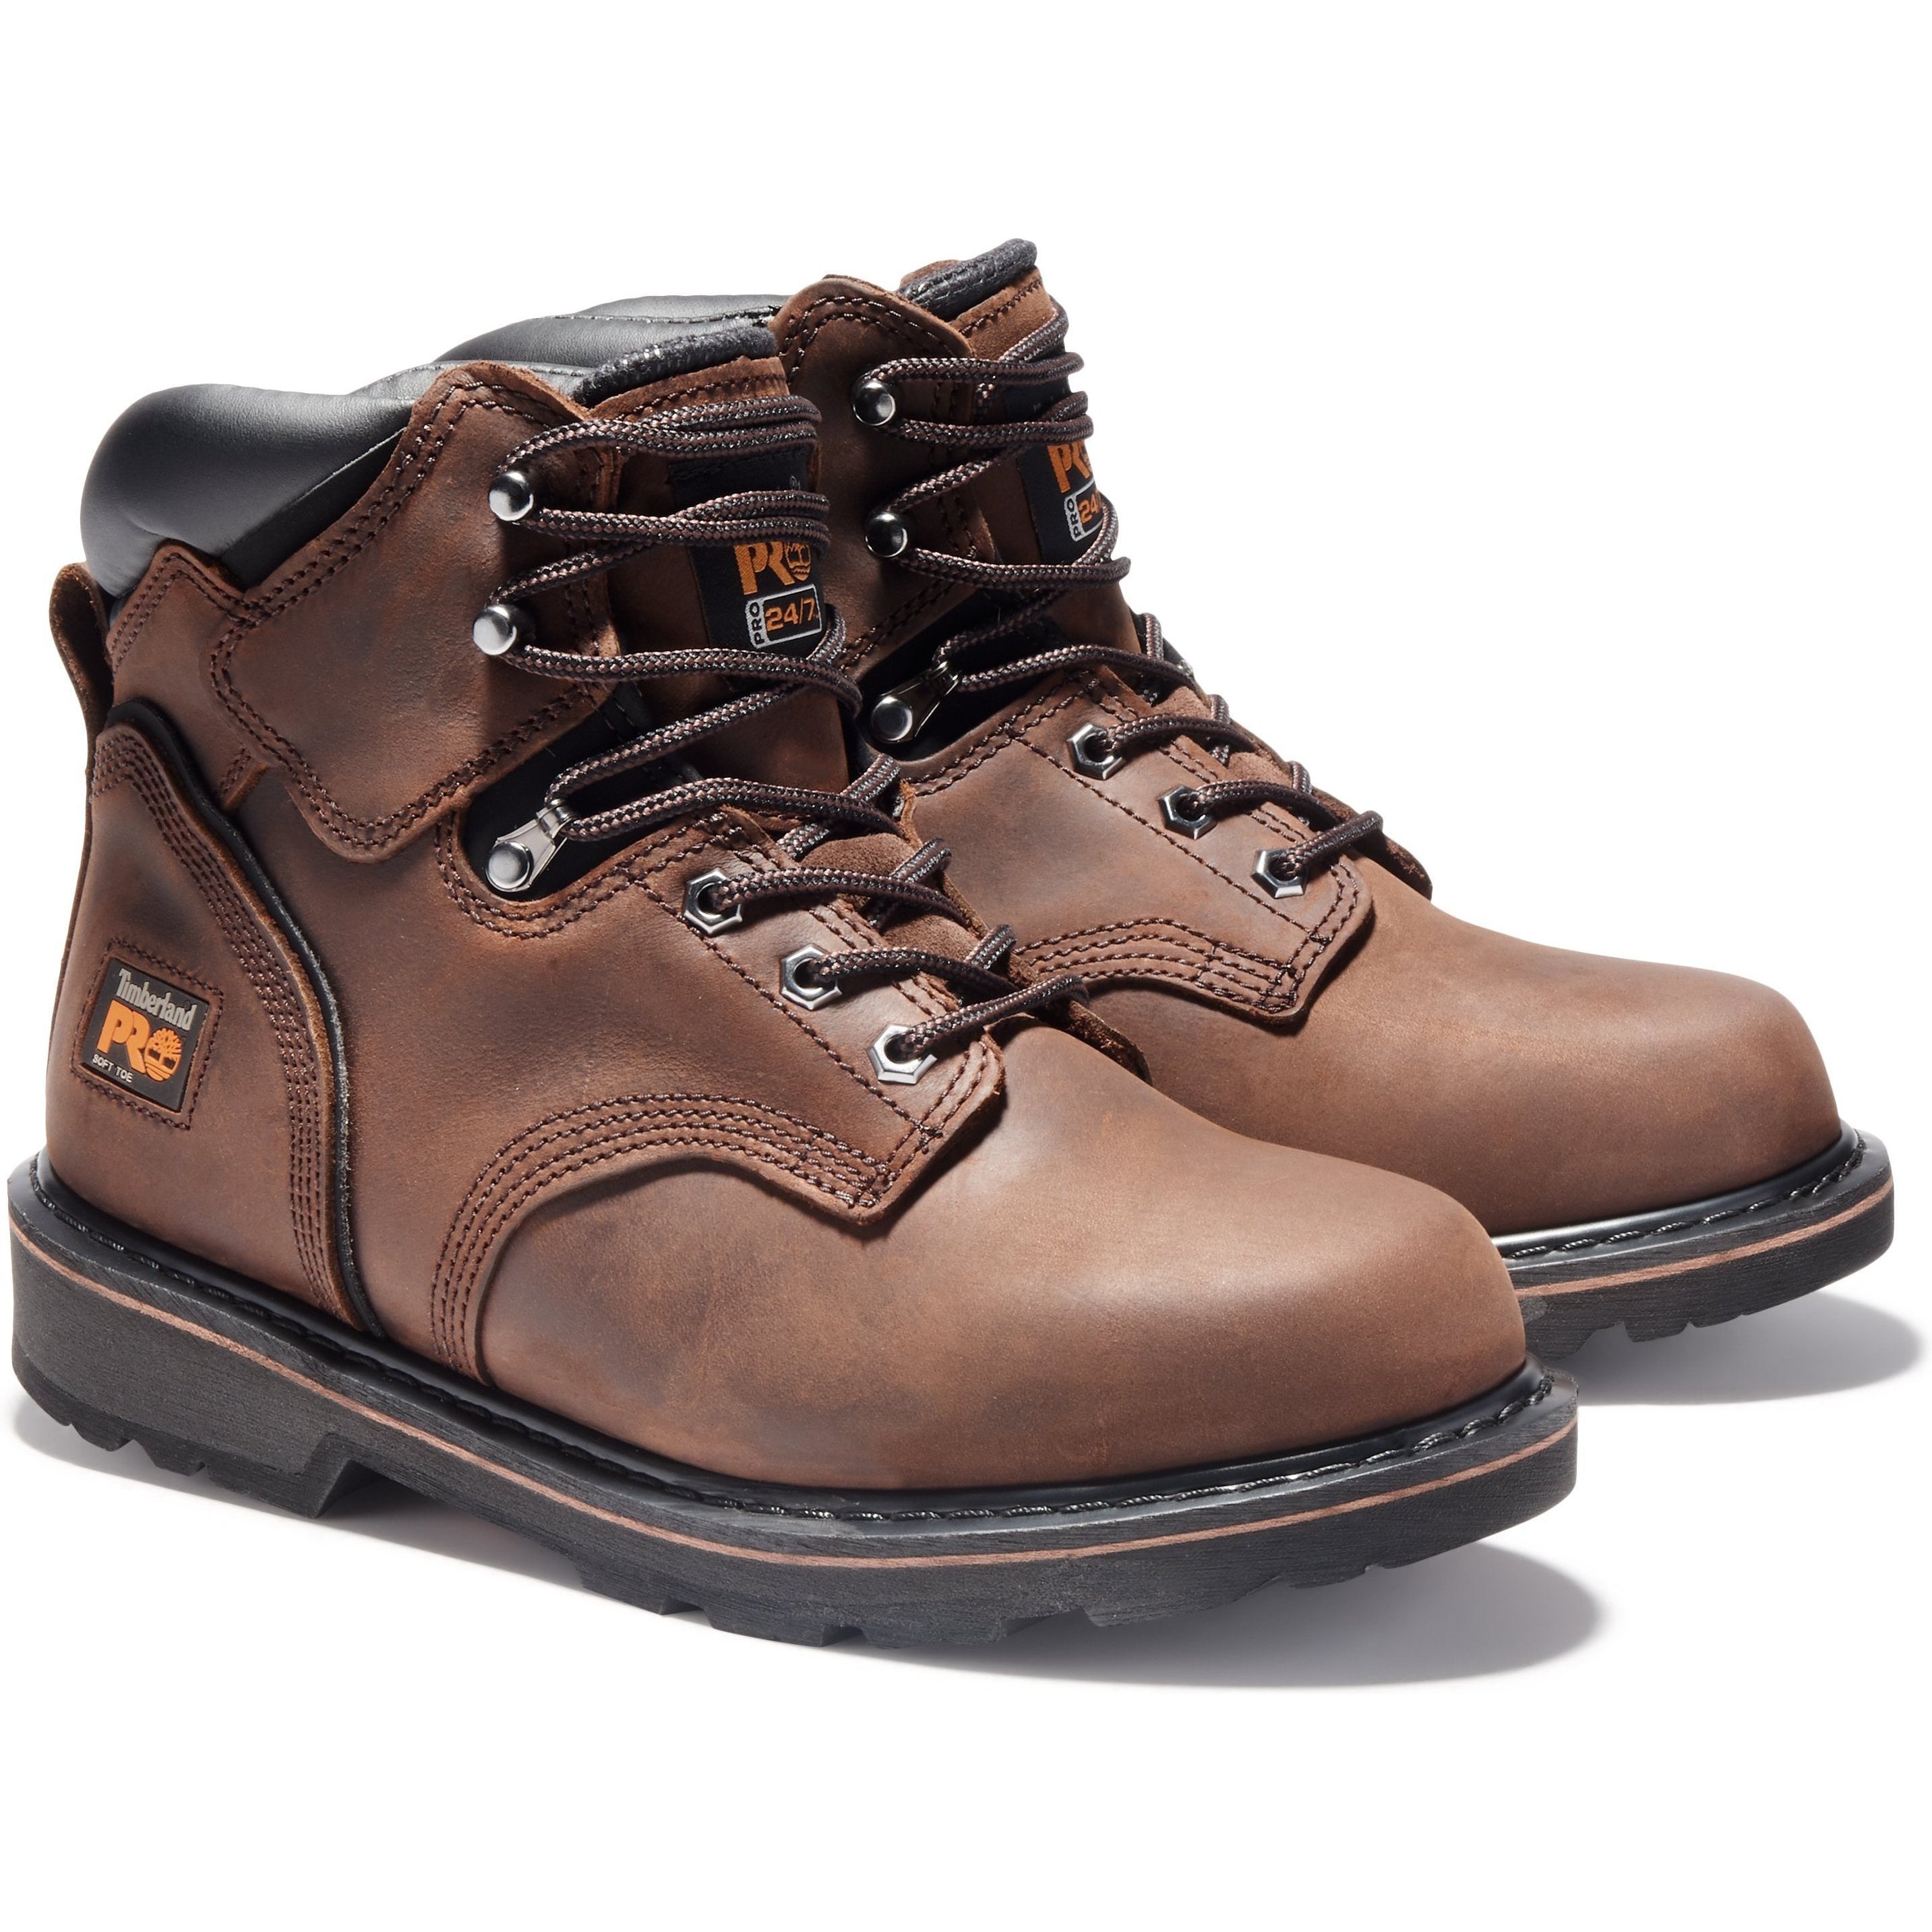 Timberland PRO Men's Pit Boss 6" Soft Toe Work Boots Brown TB033046214 7 / Medium / Brown - Overlook Boots